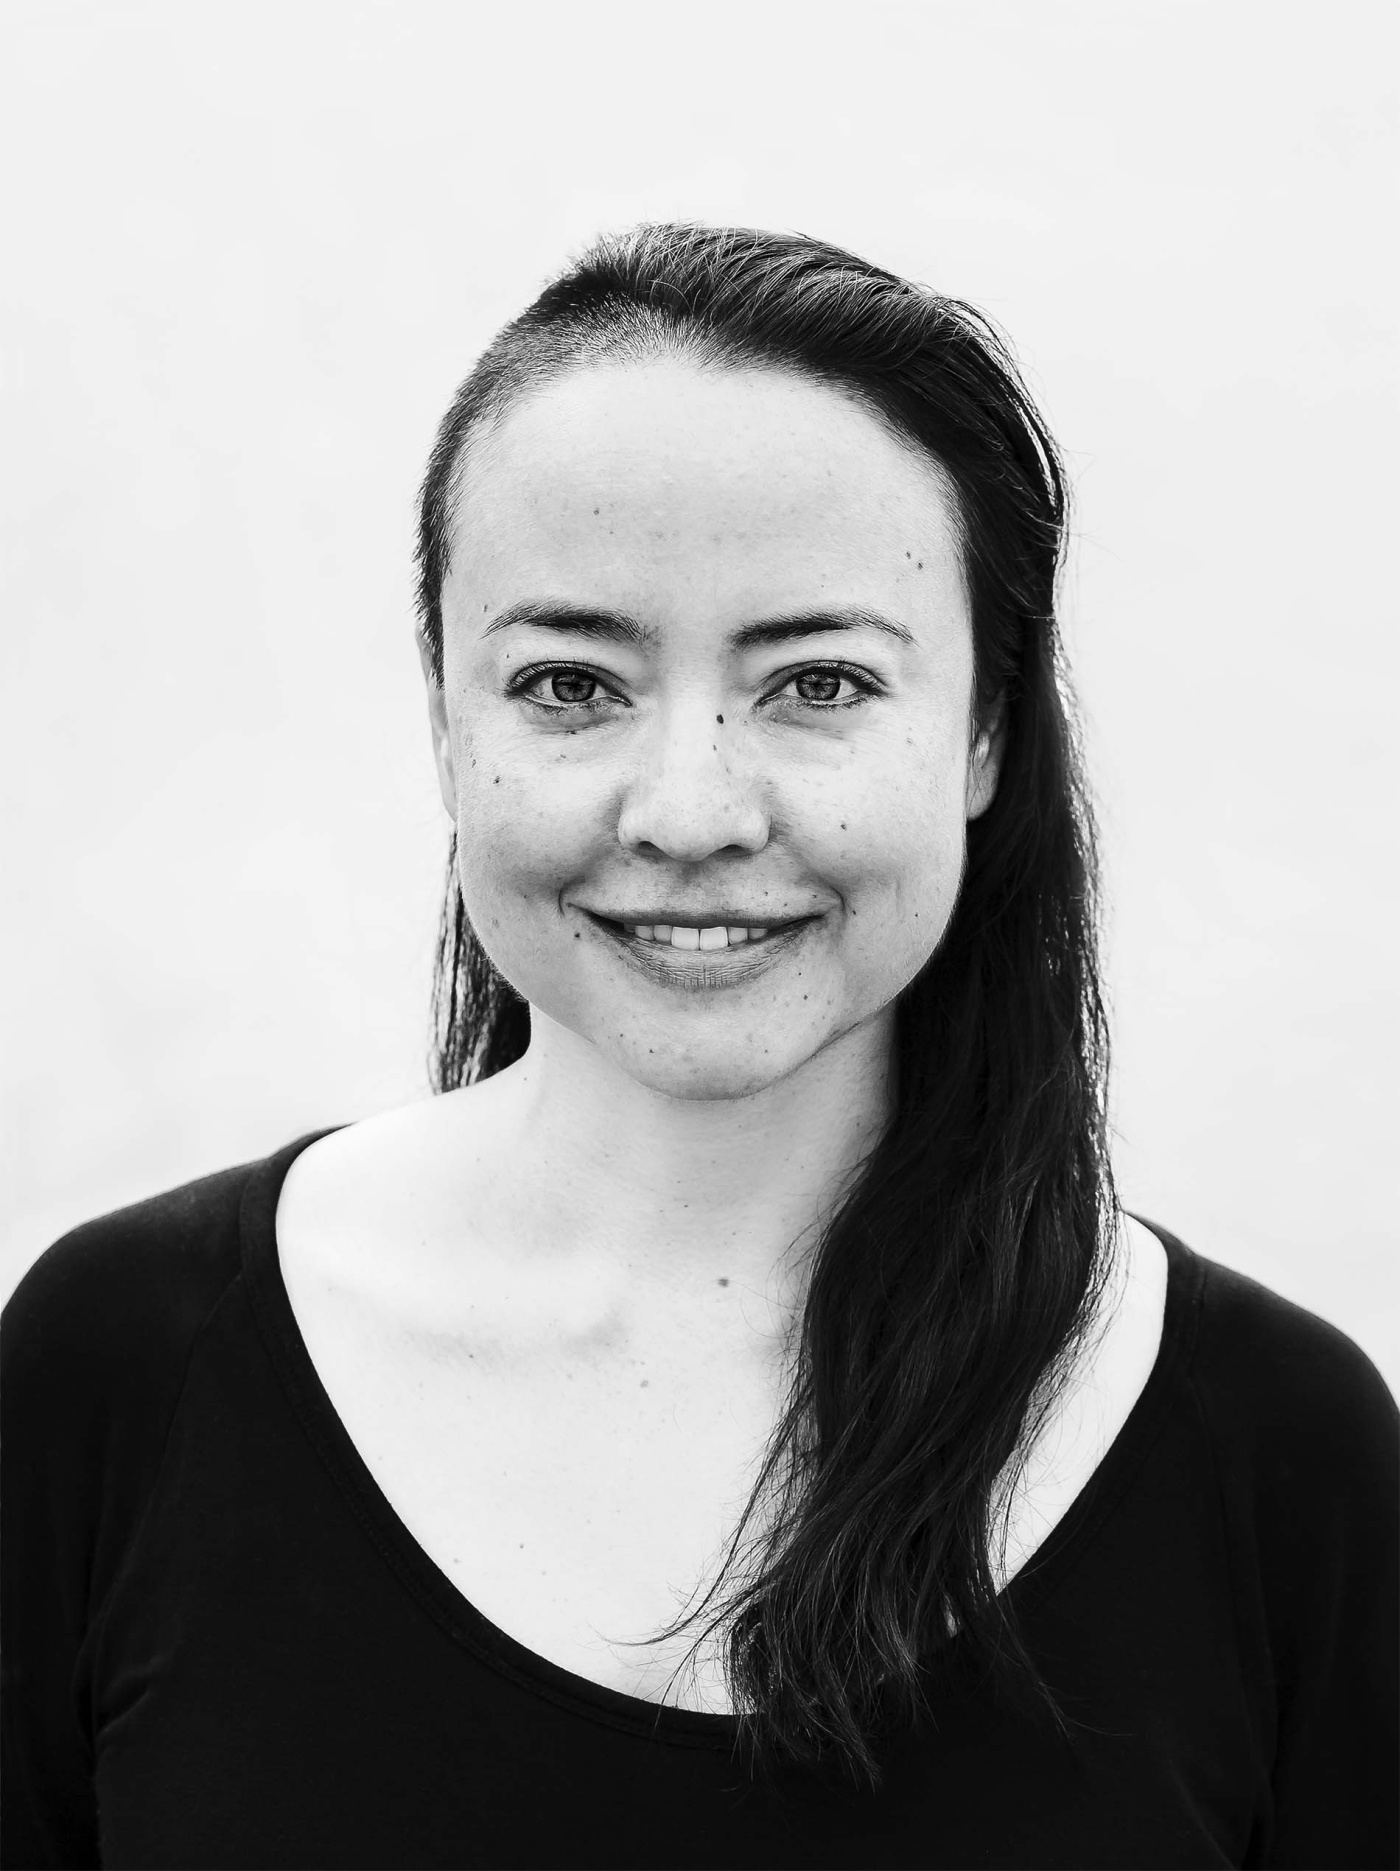 Close-up black and white image of Eirene Tran Donohue.